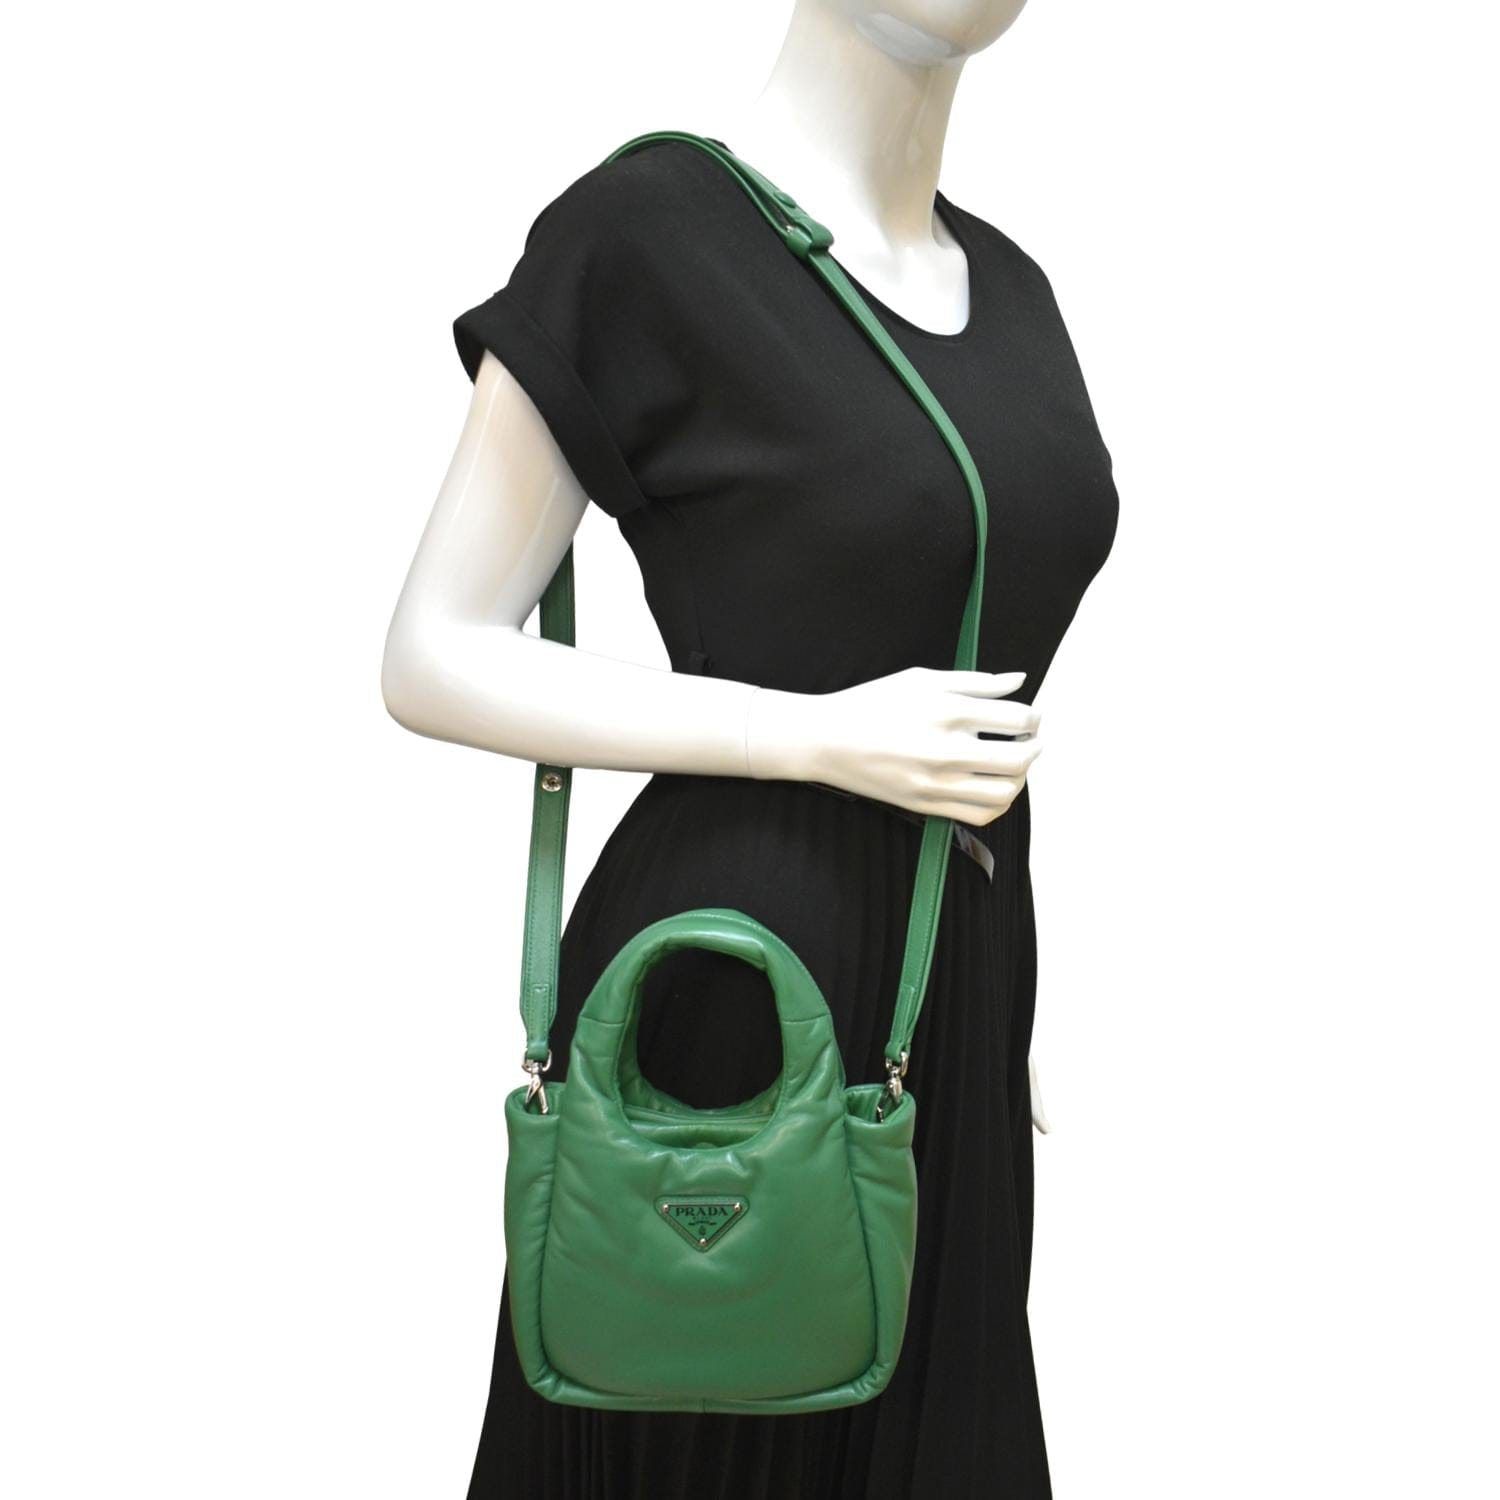 Nylon - Hand - PRADA - Green - Bag - Leather - Prada Toiletry Bags